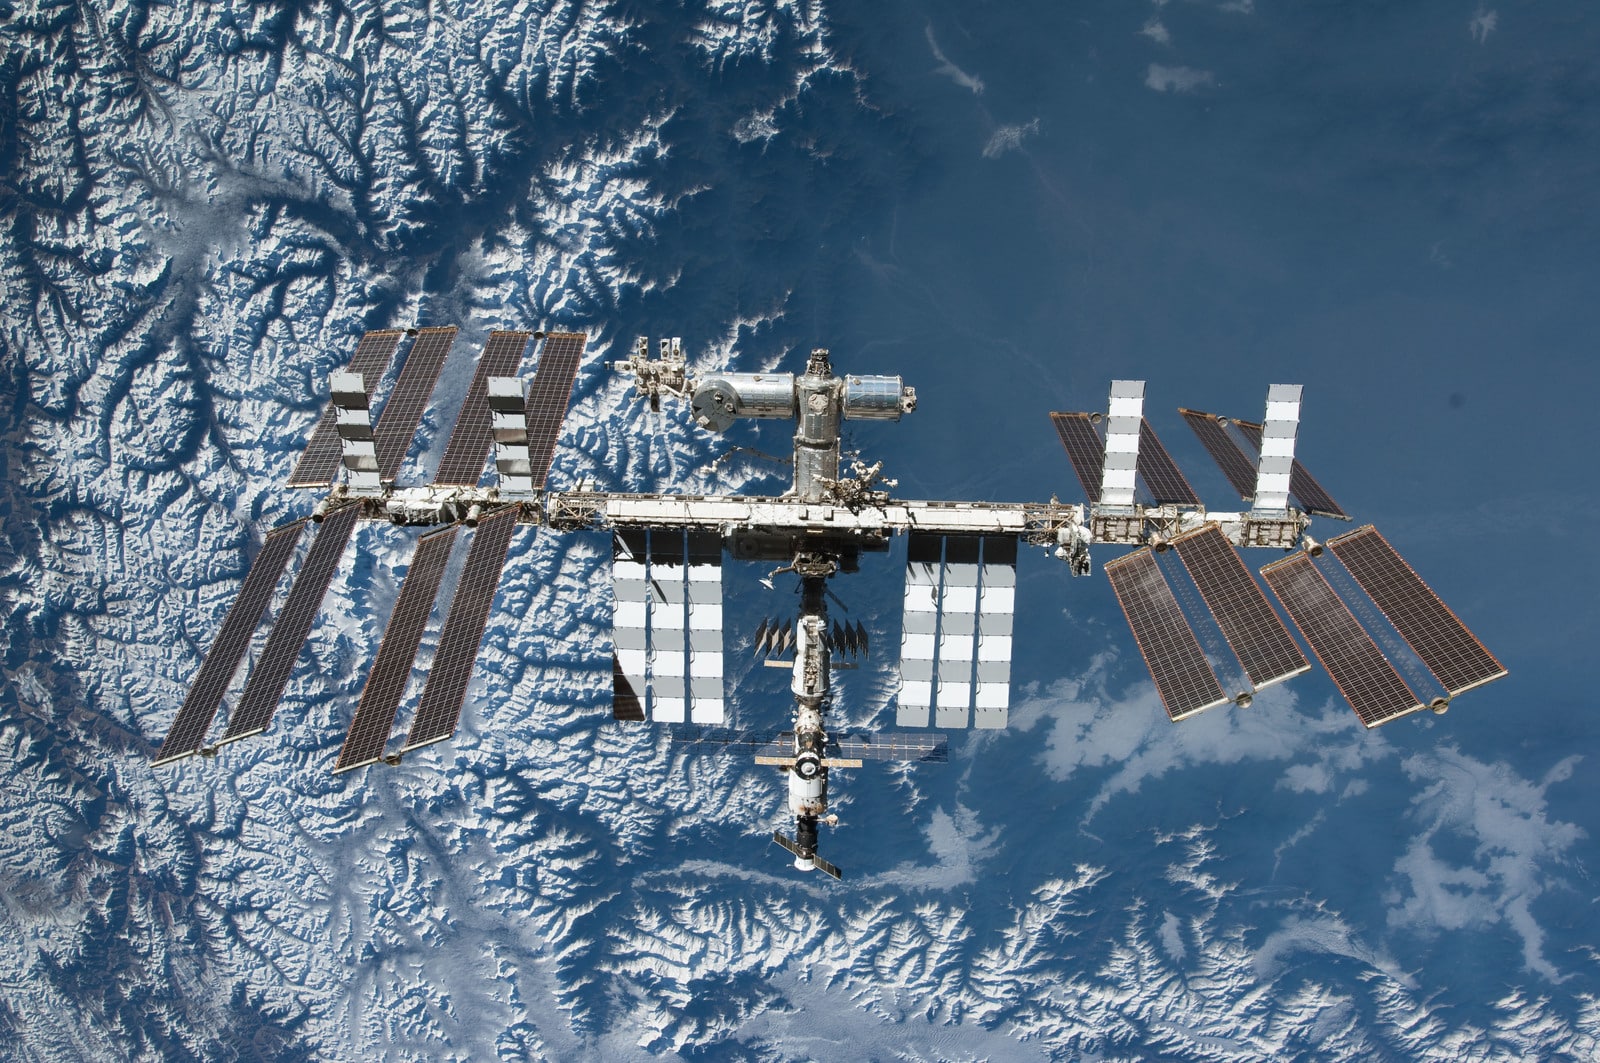 La Station spatiale internationale.